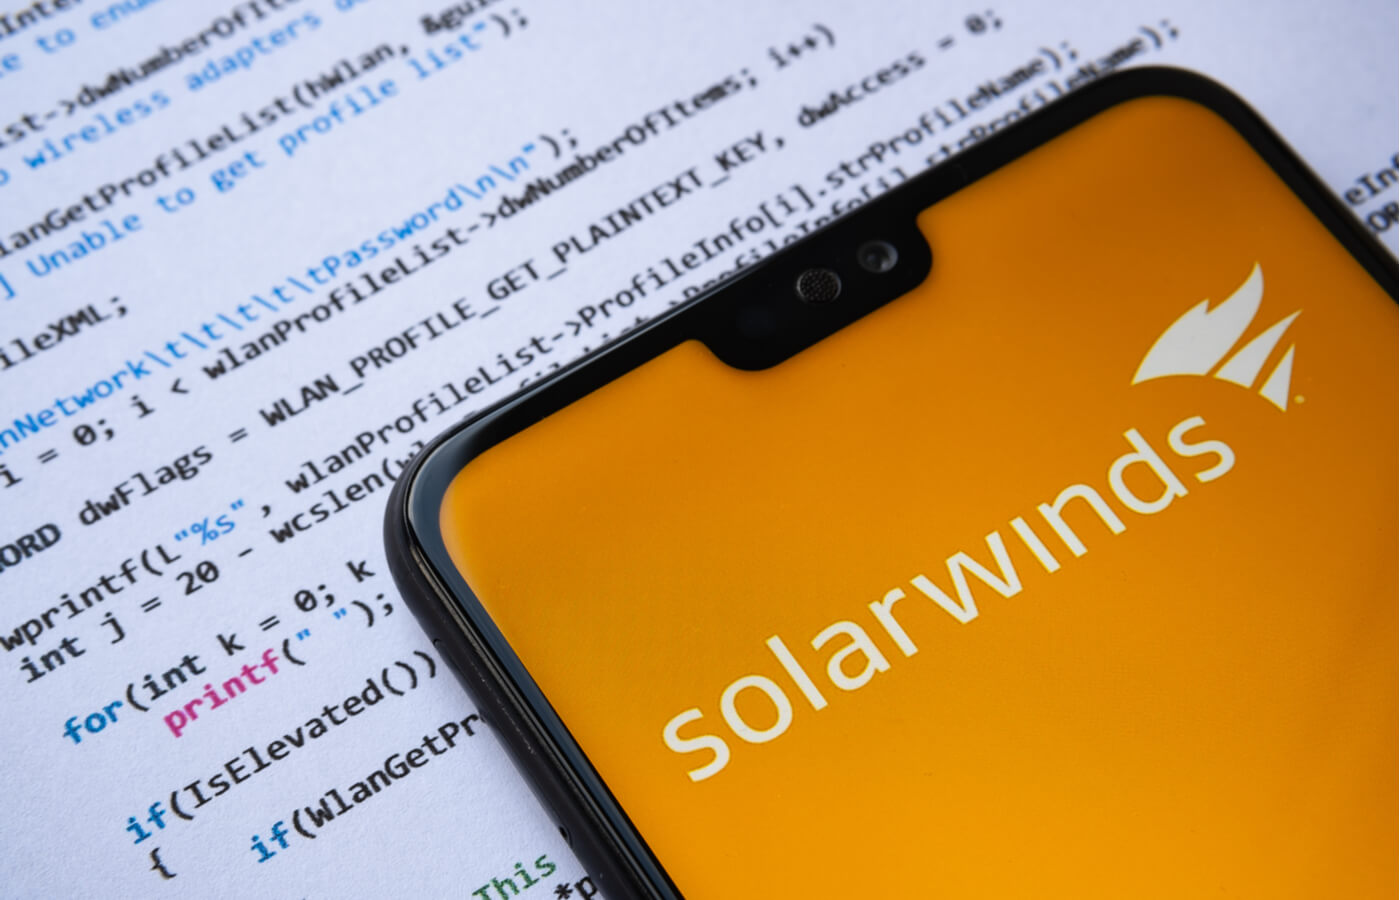 solarwinds cyber attack